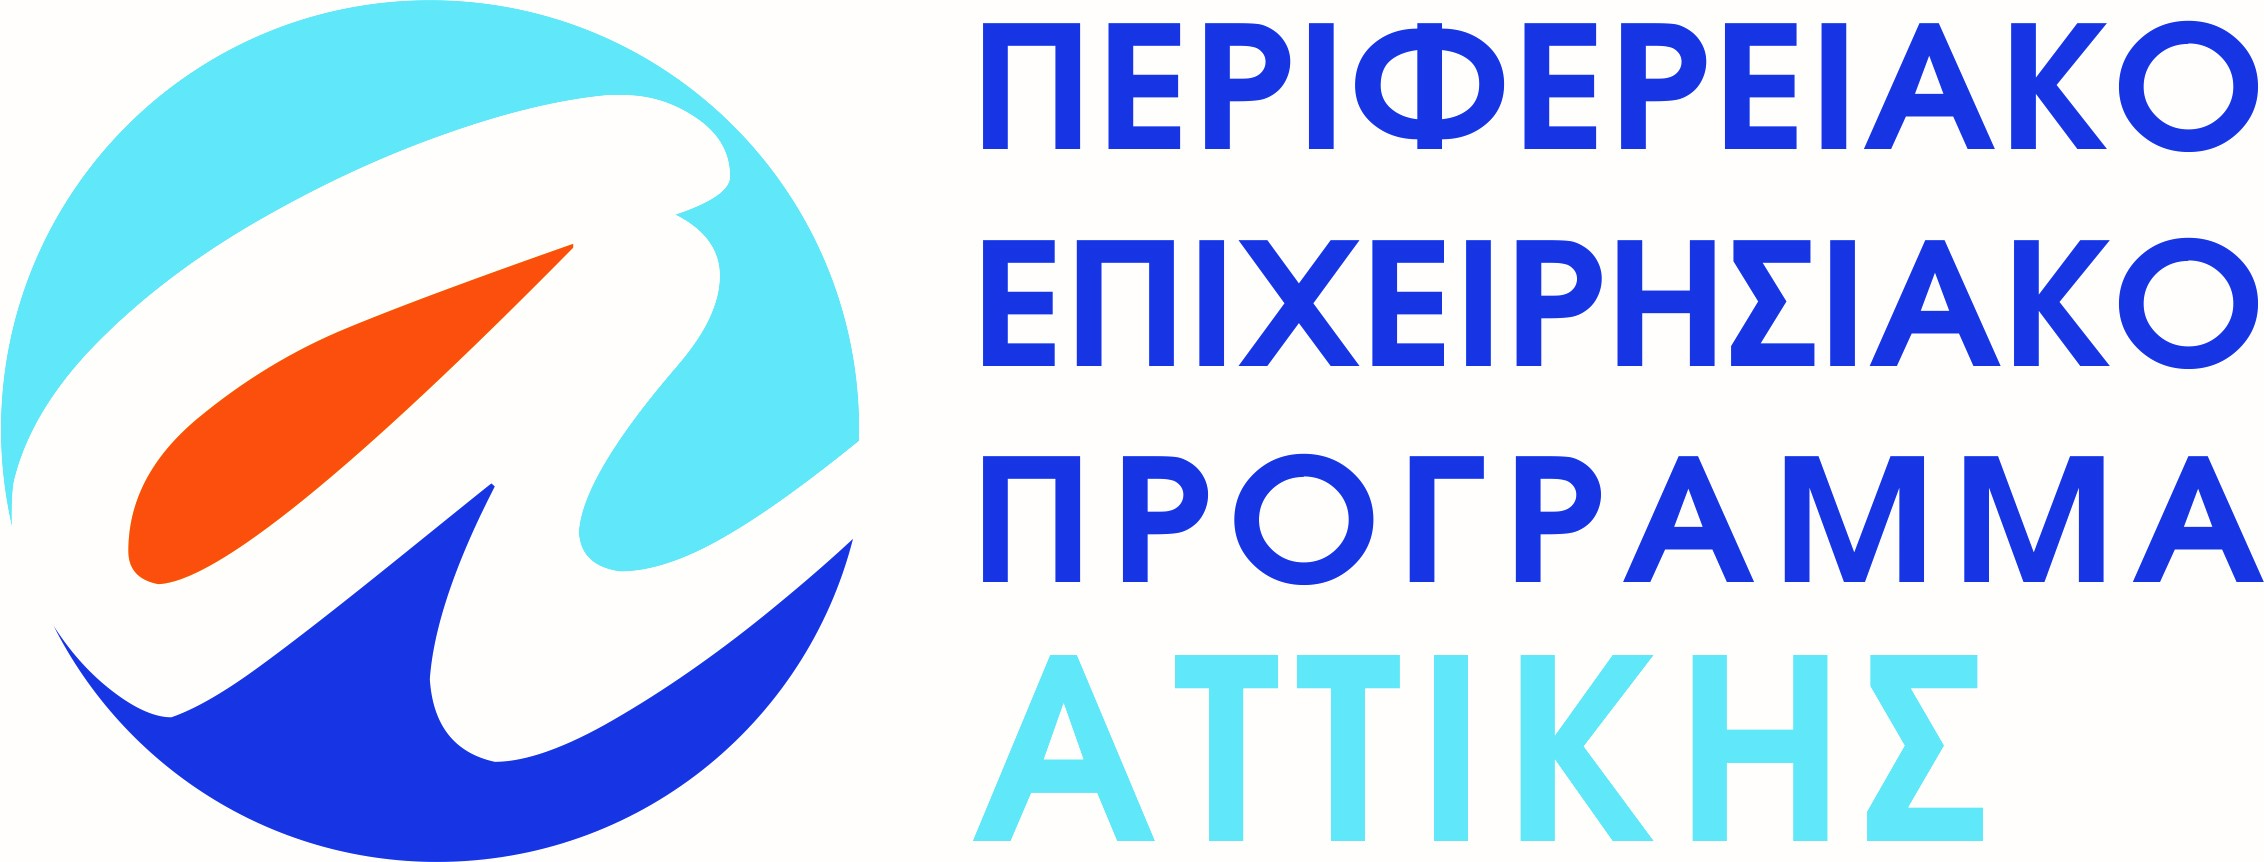 attiki_logo.png